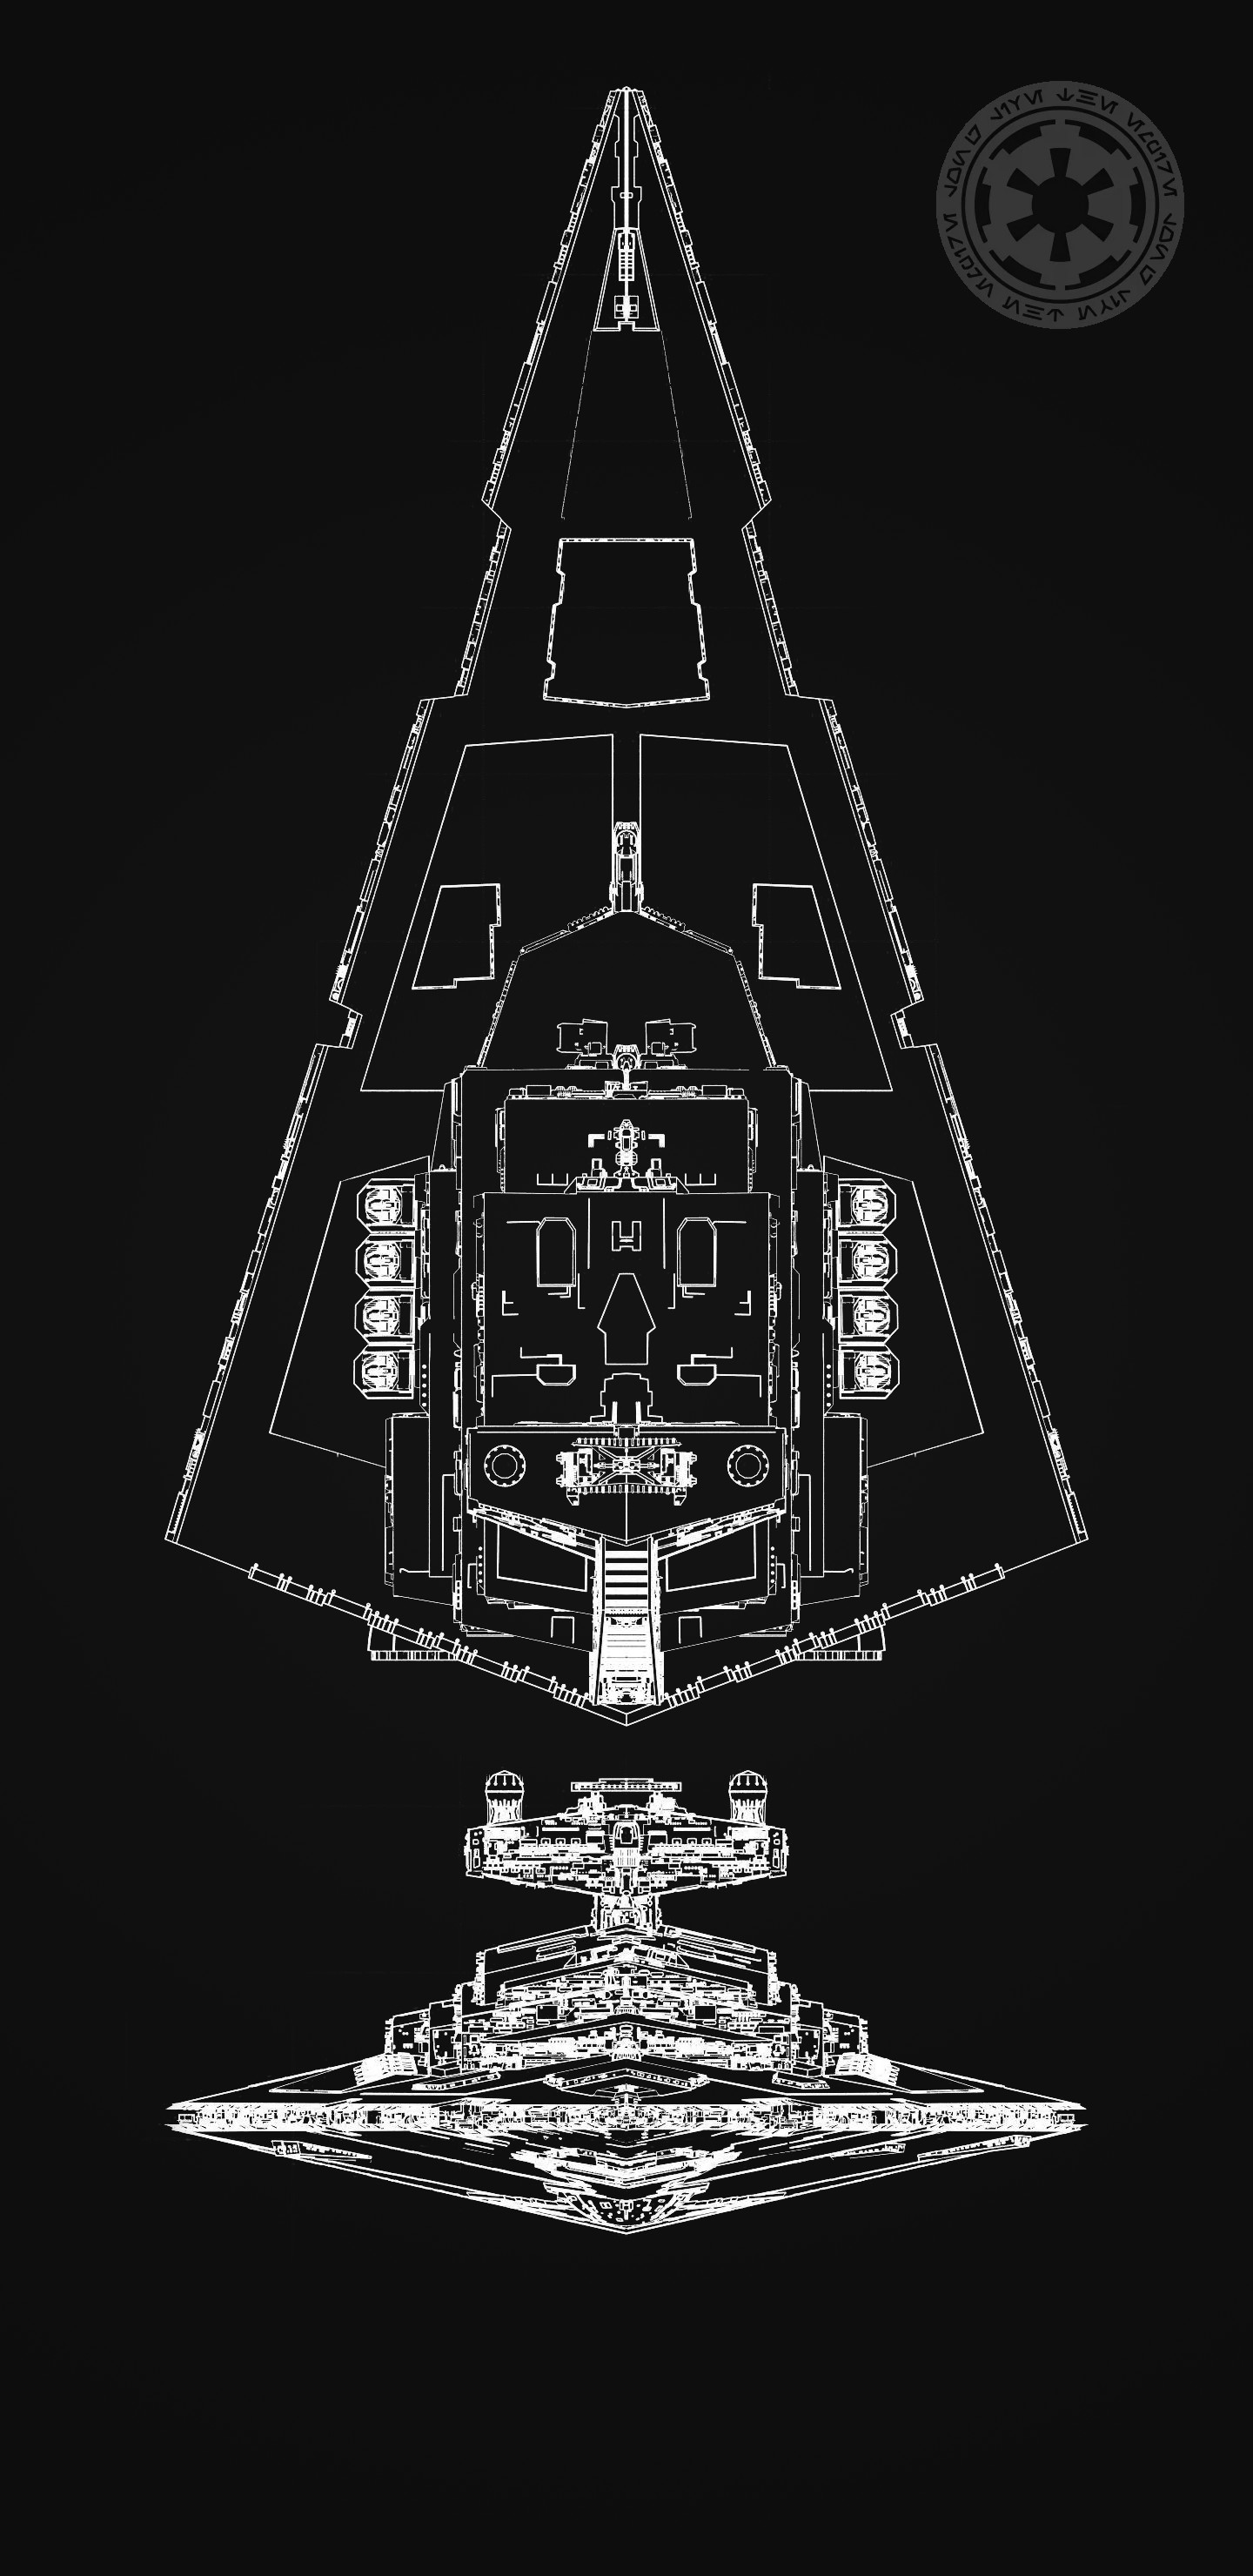 1440x2960 Imperial star destroyer wallpaper